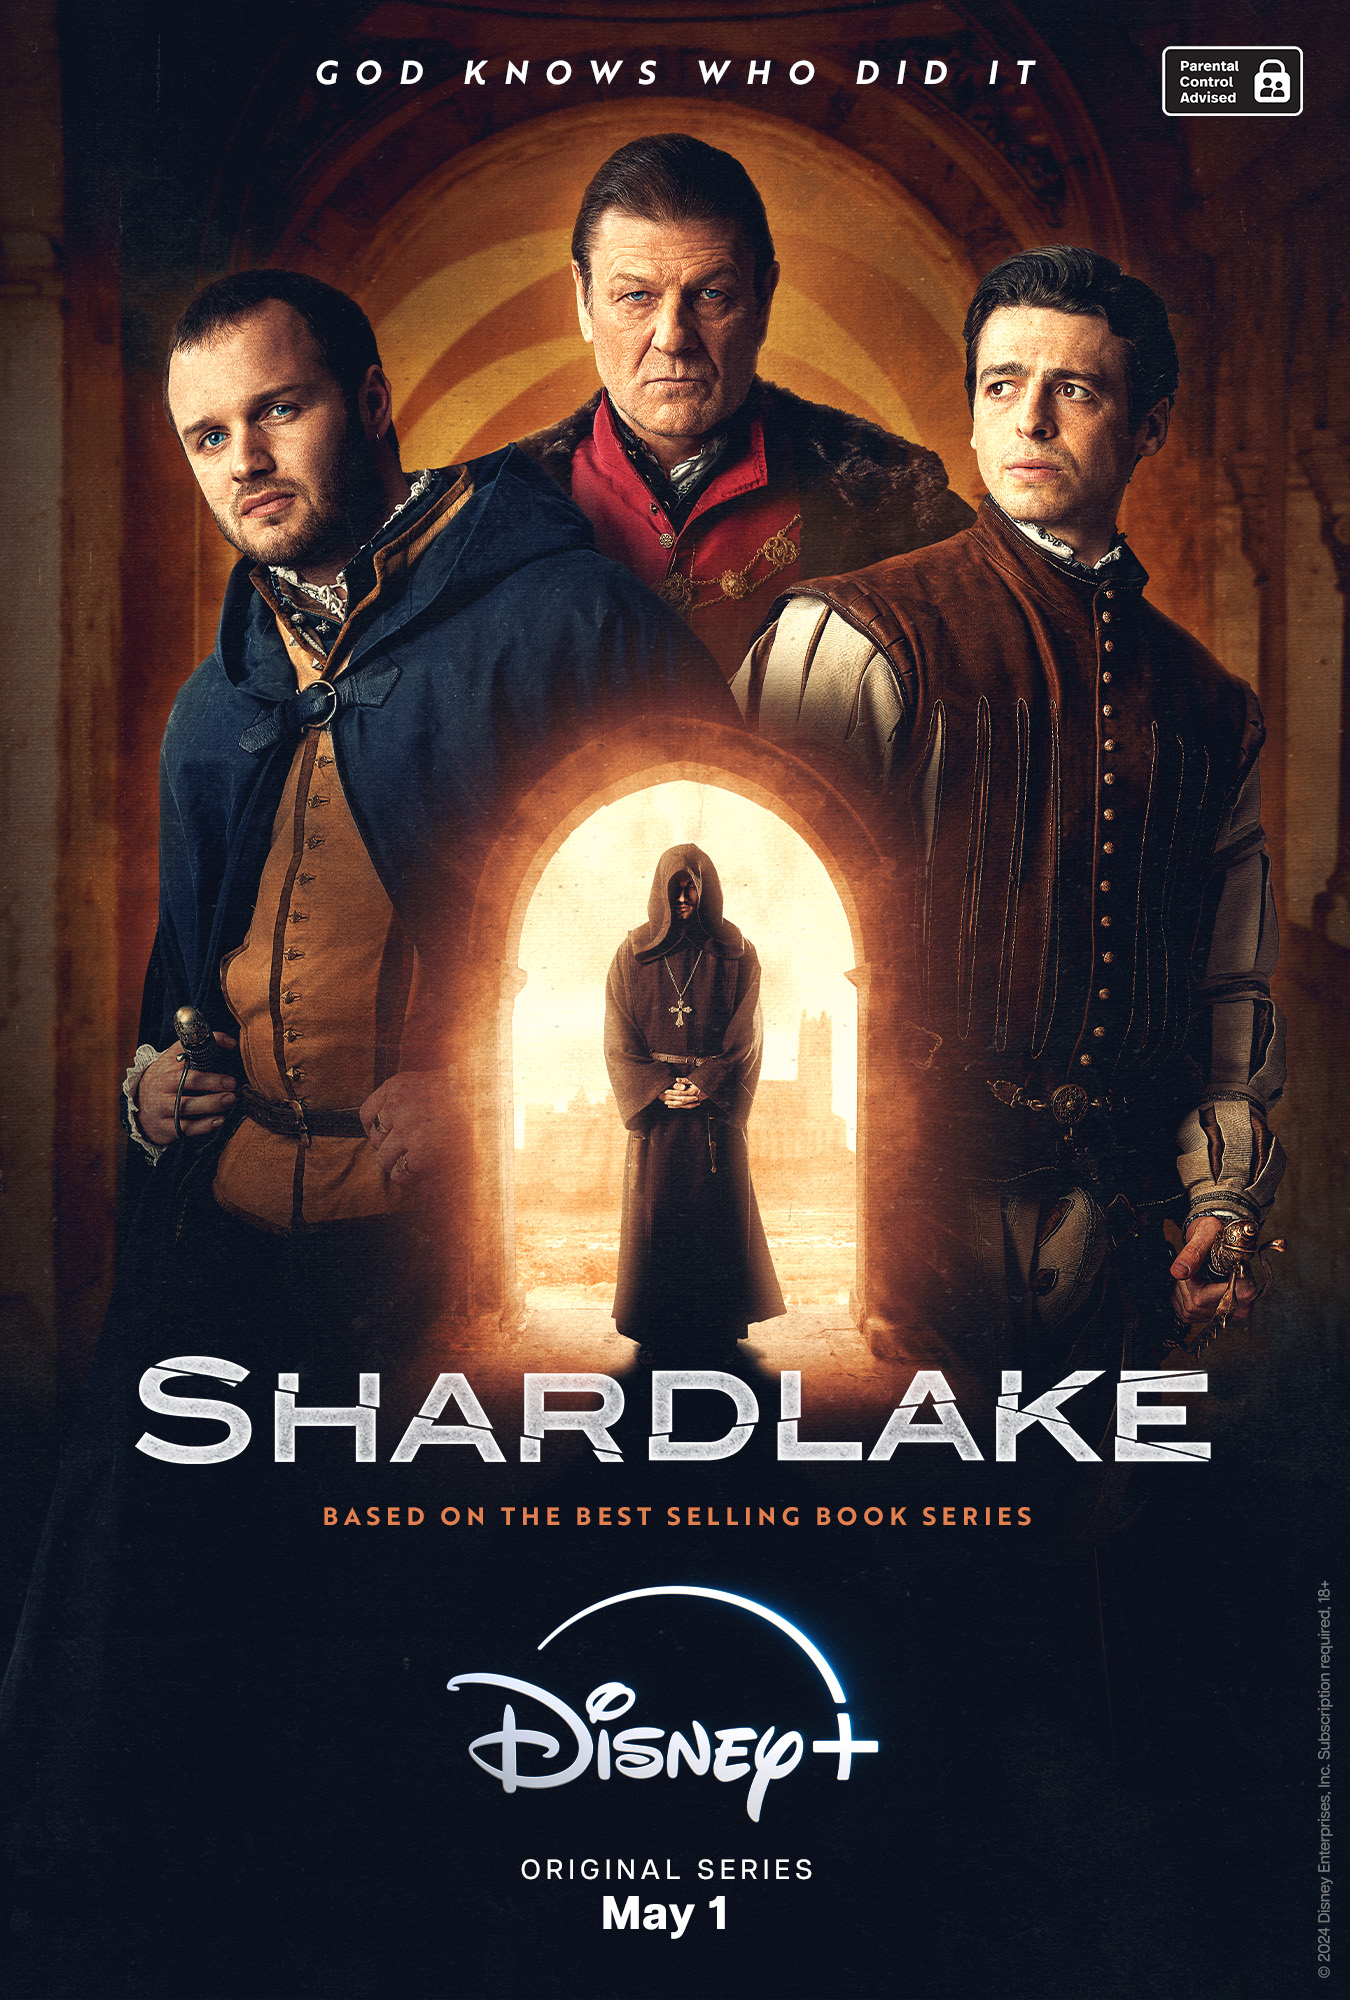 Shardlake poster